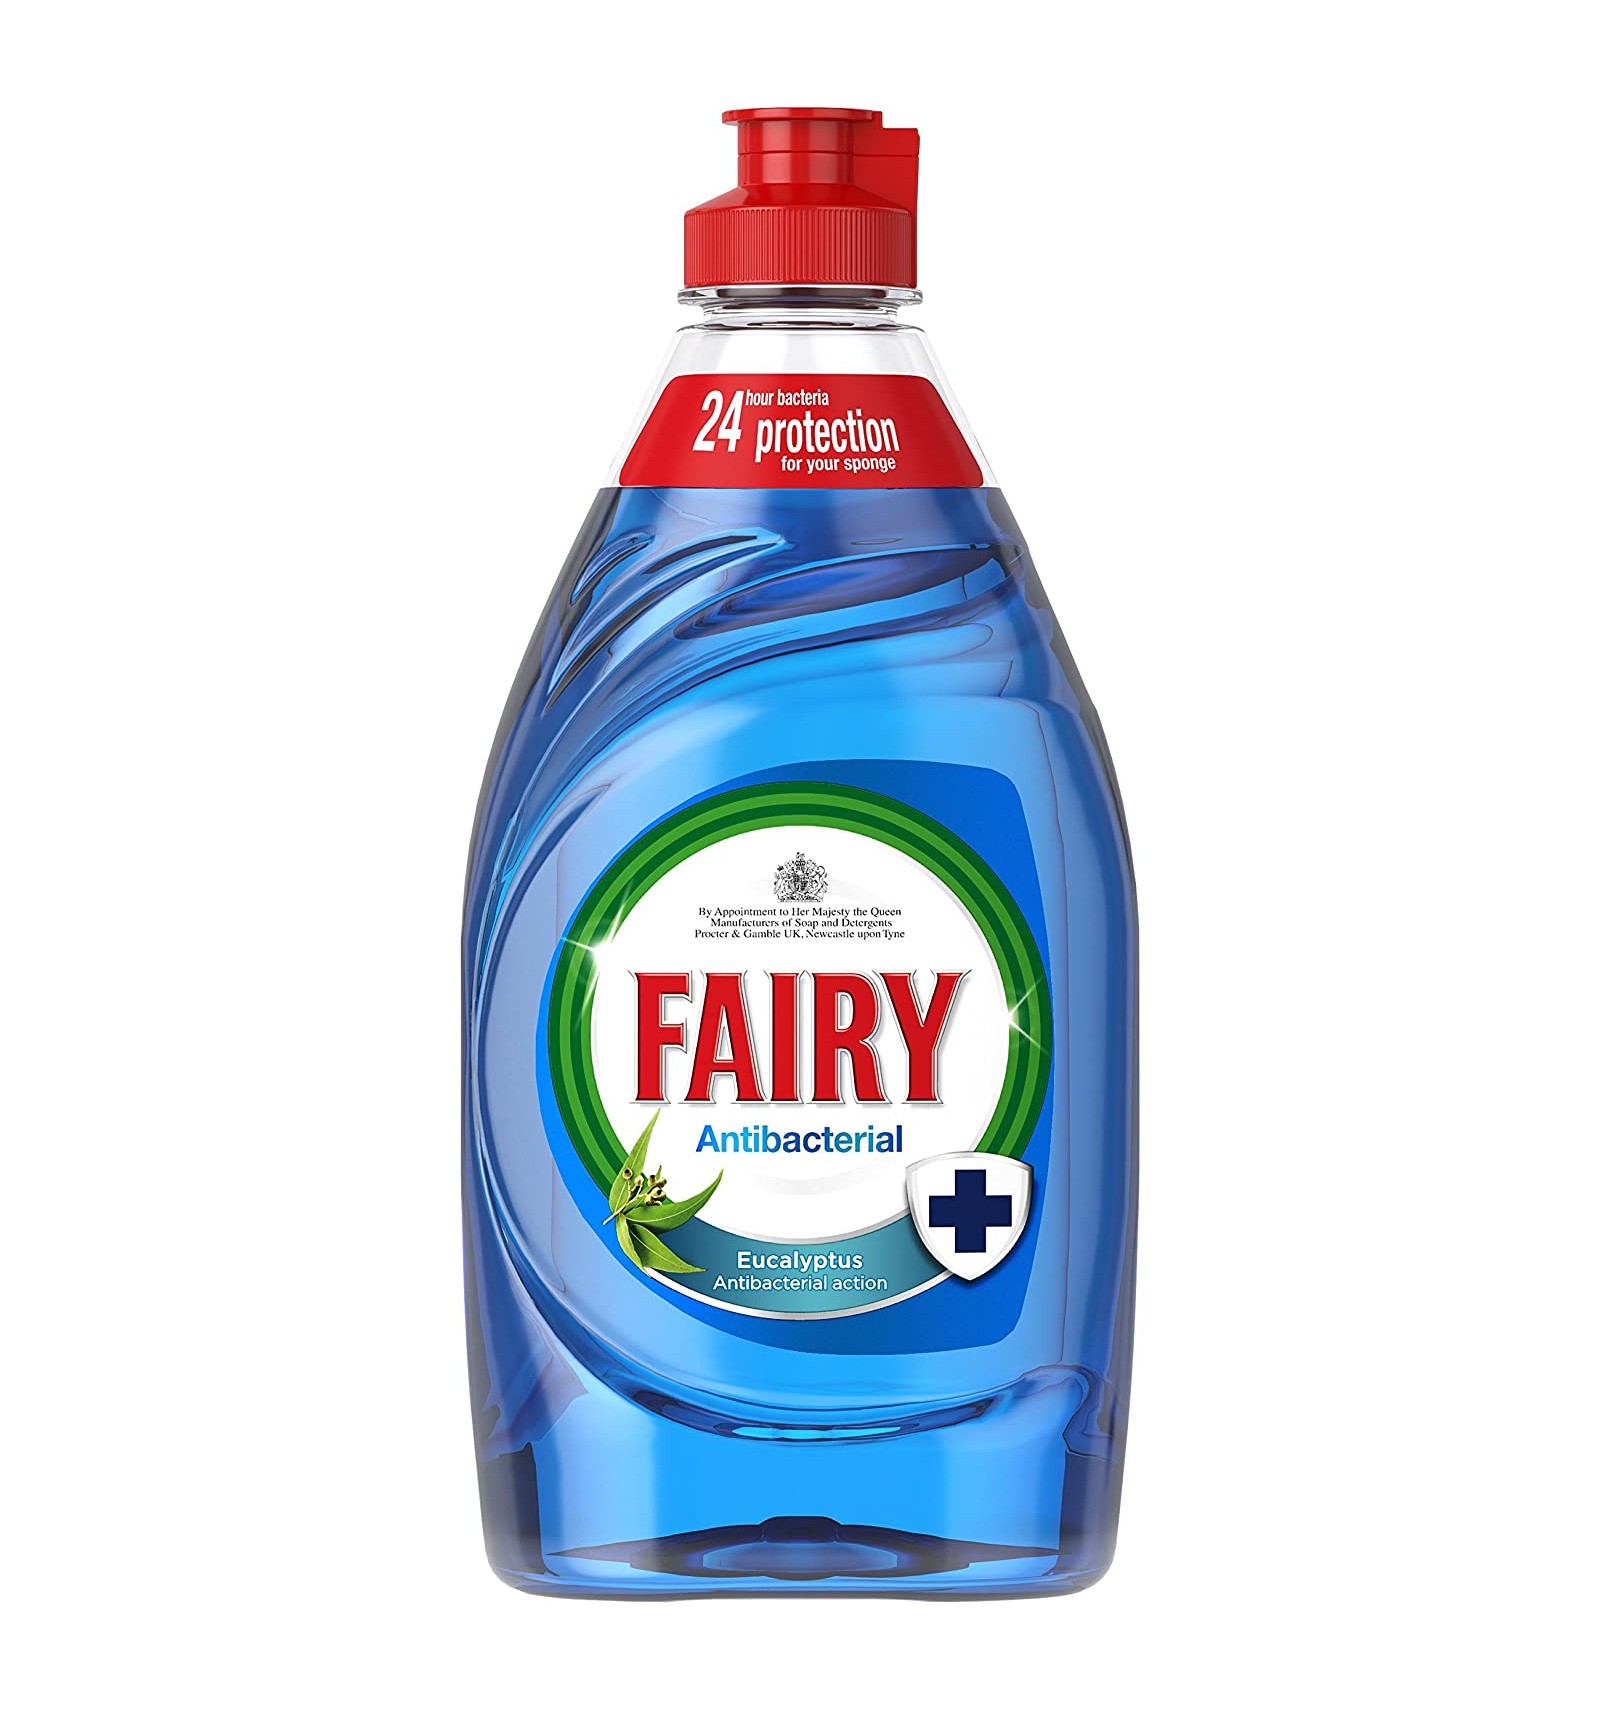 Fairy Eucalyptus Antibacterial Washing Up Liquid, 383 ml